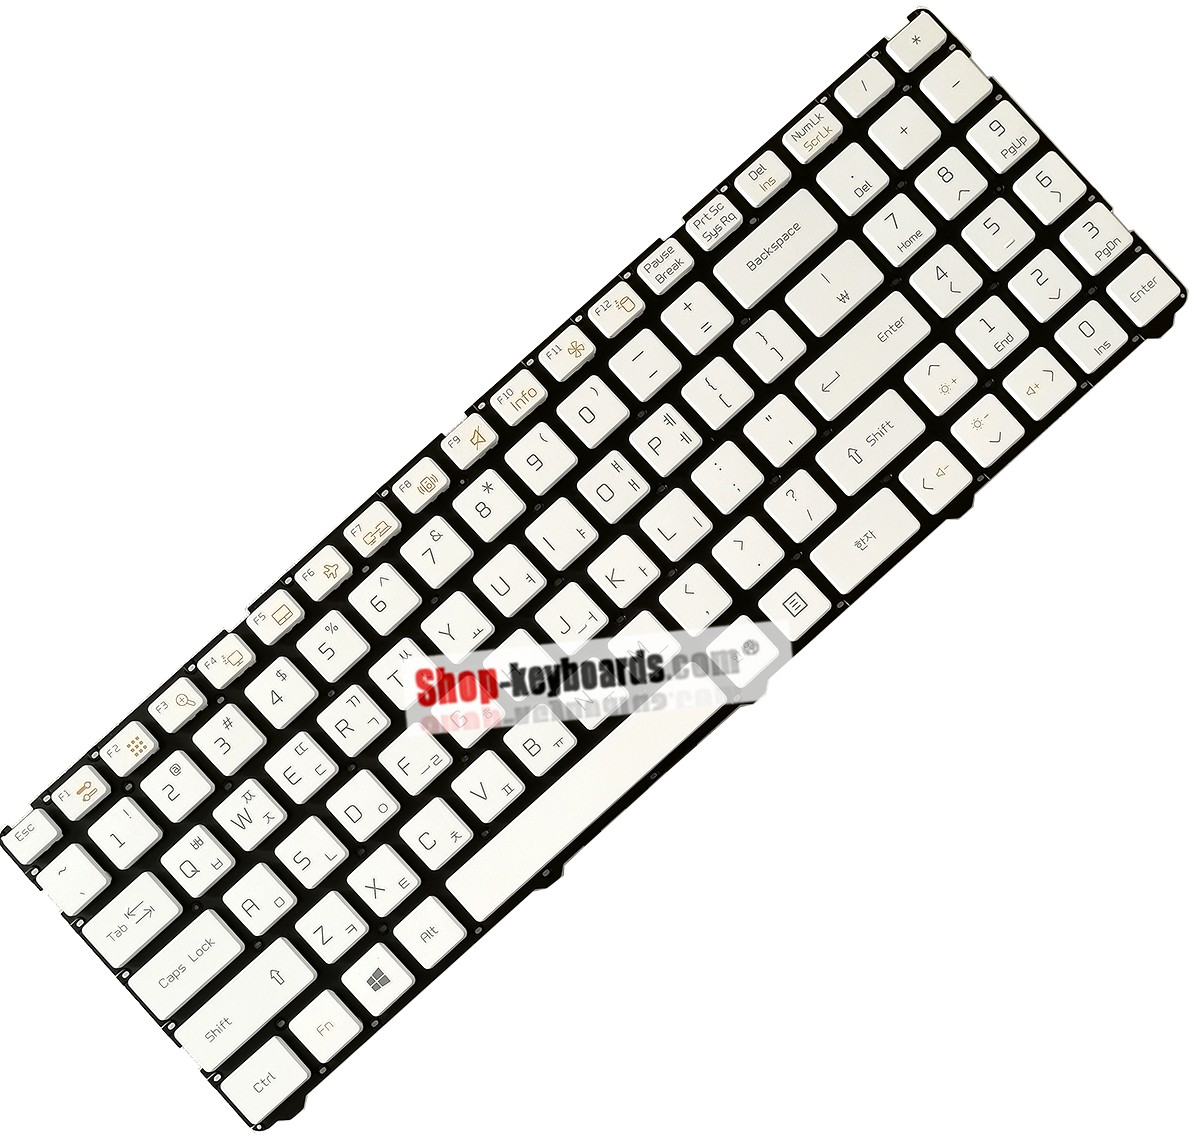 LG MP-12K73LA-9207 Keyboard replacement